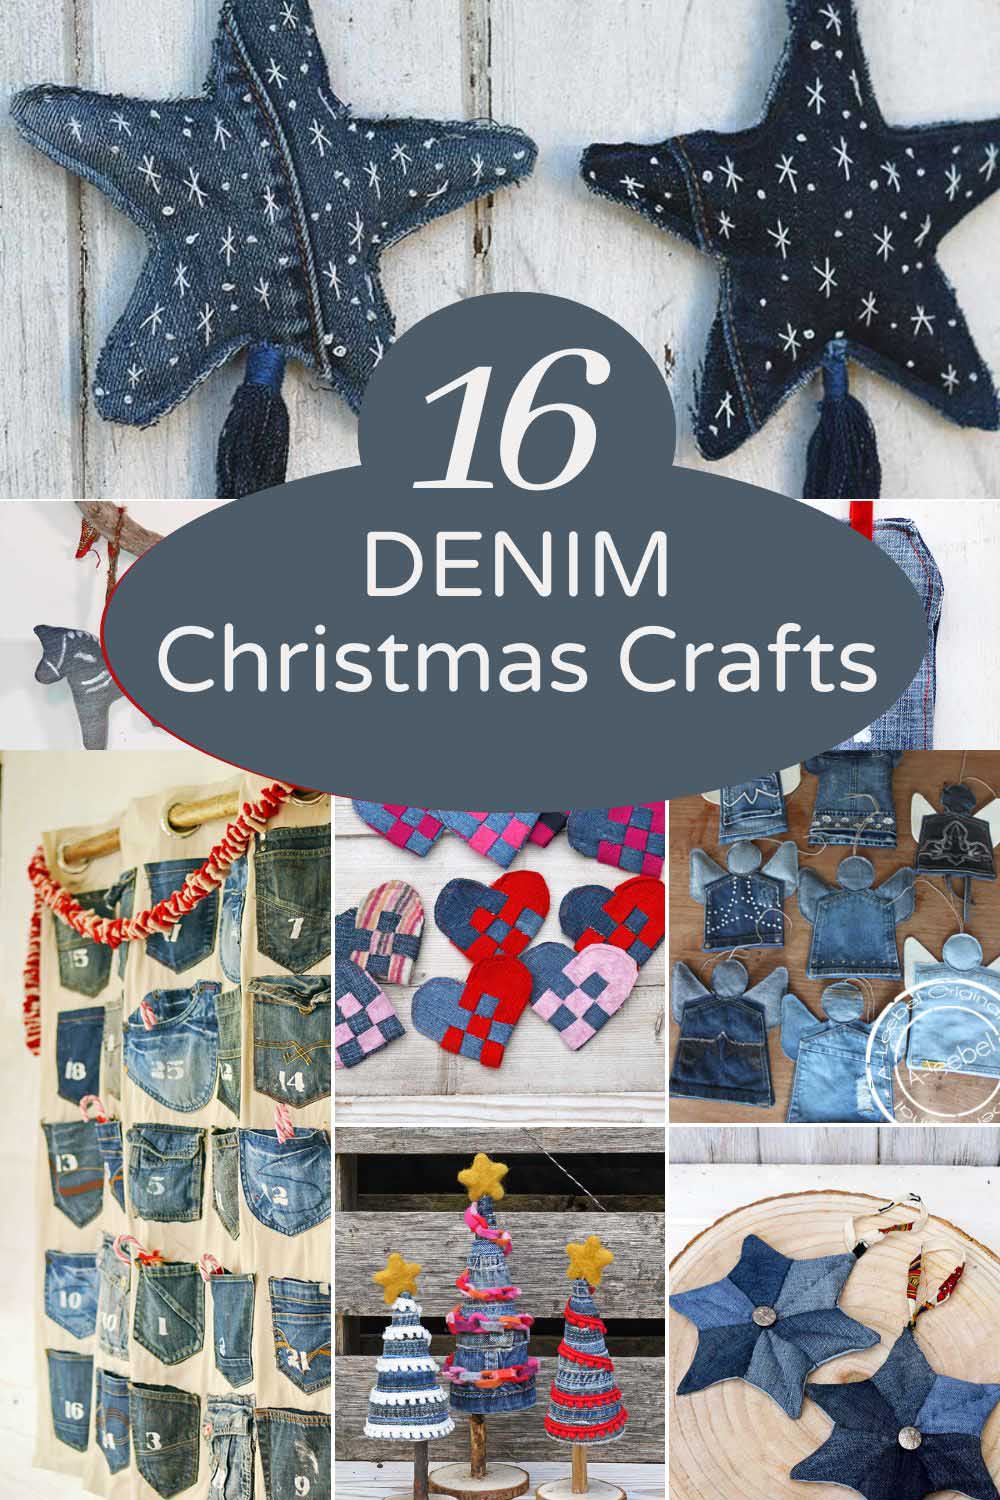 16 Denim Christmas crafts